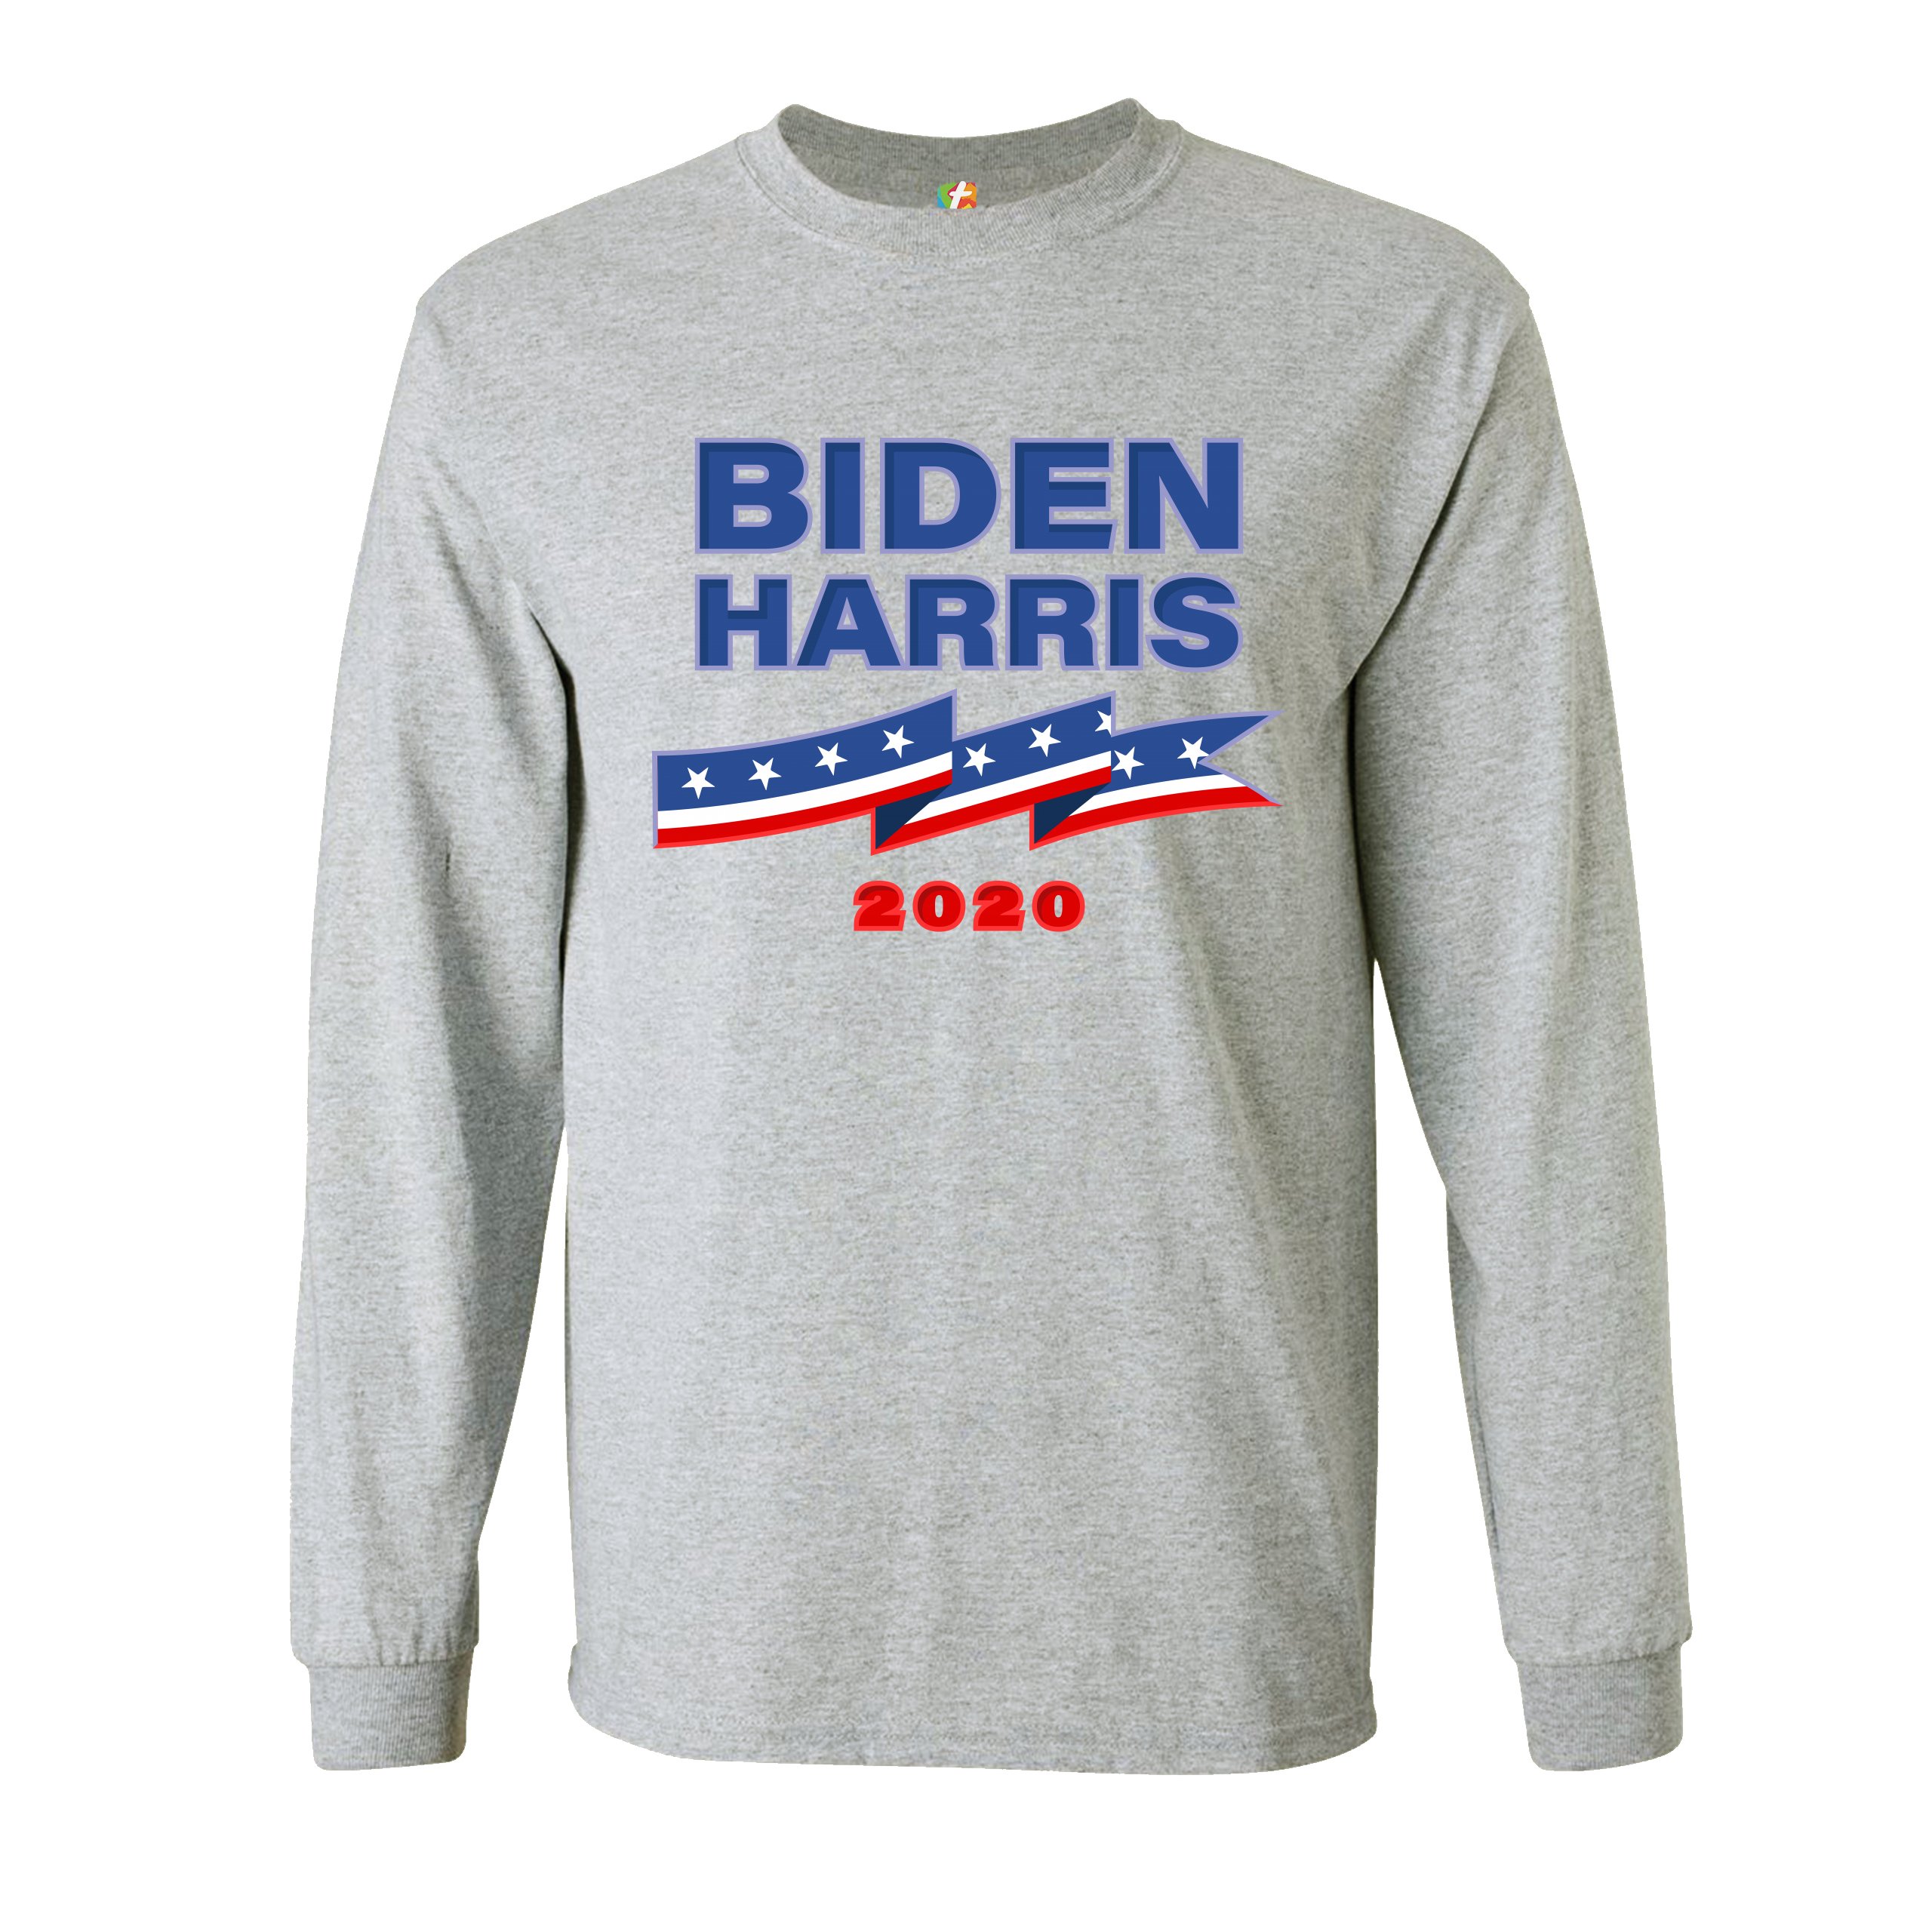 Biden Harris 2020 Long Sleeve T-shirt Stars and Stripes Democratic ...